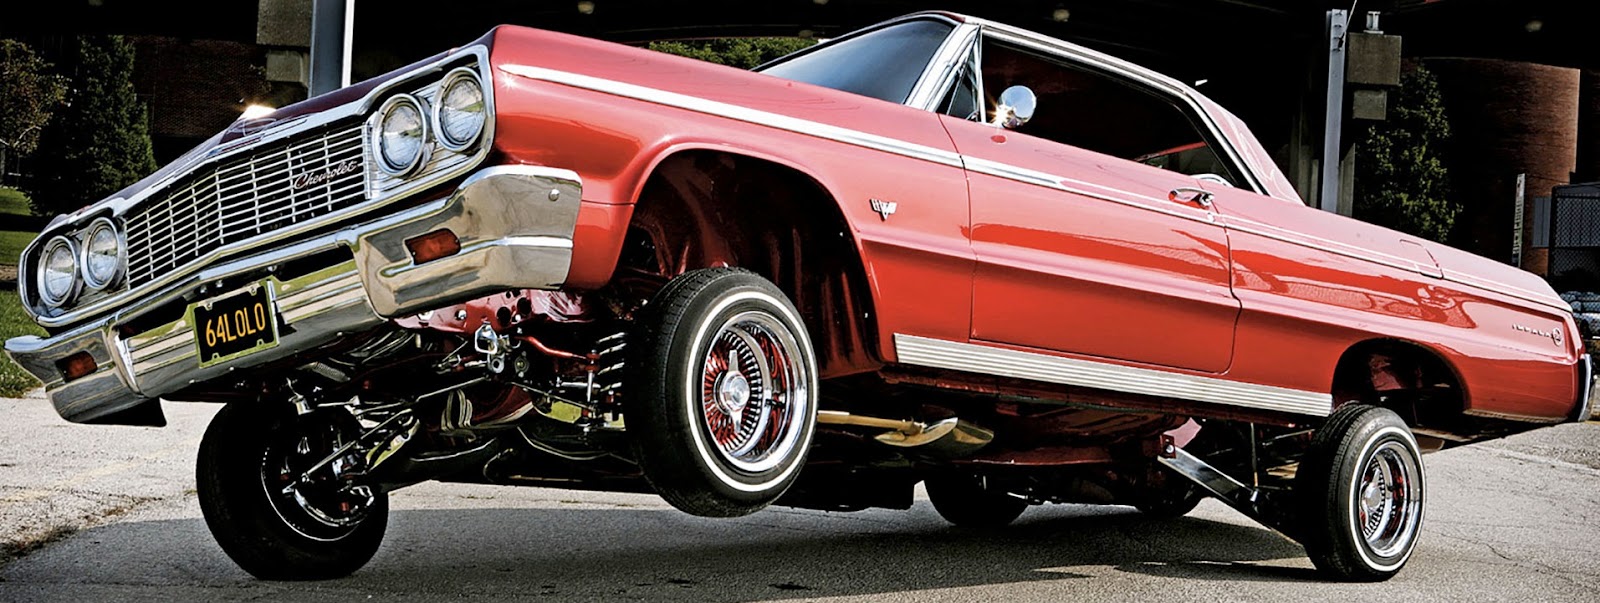 Chevy Impala Lowrider Wallpaper Image Galleries Imagekb